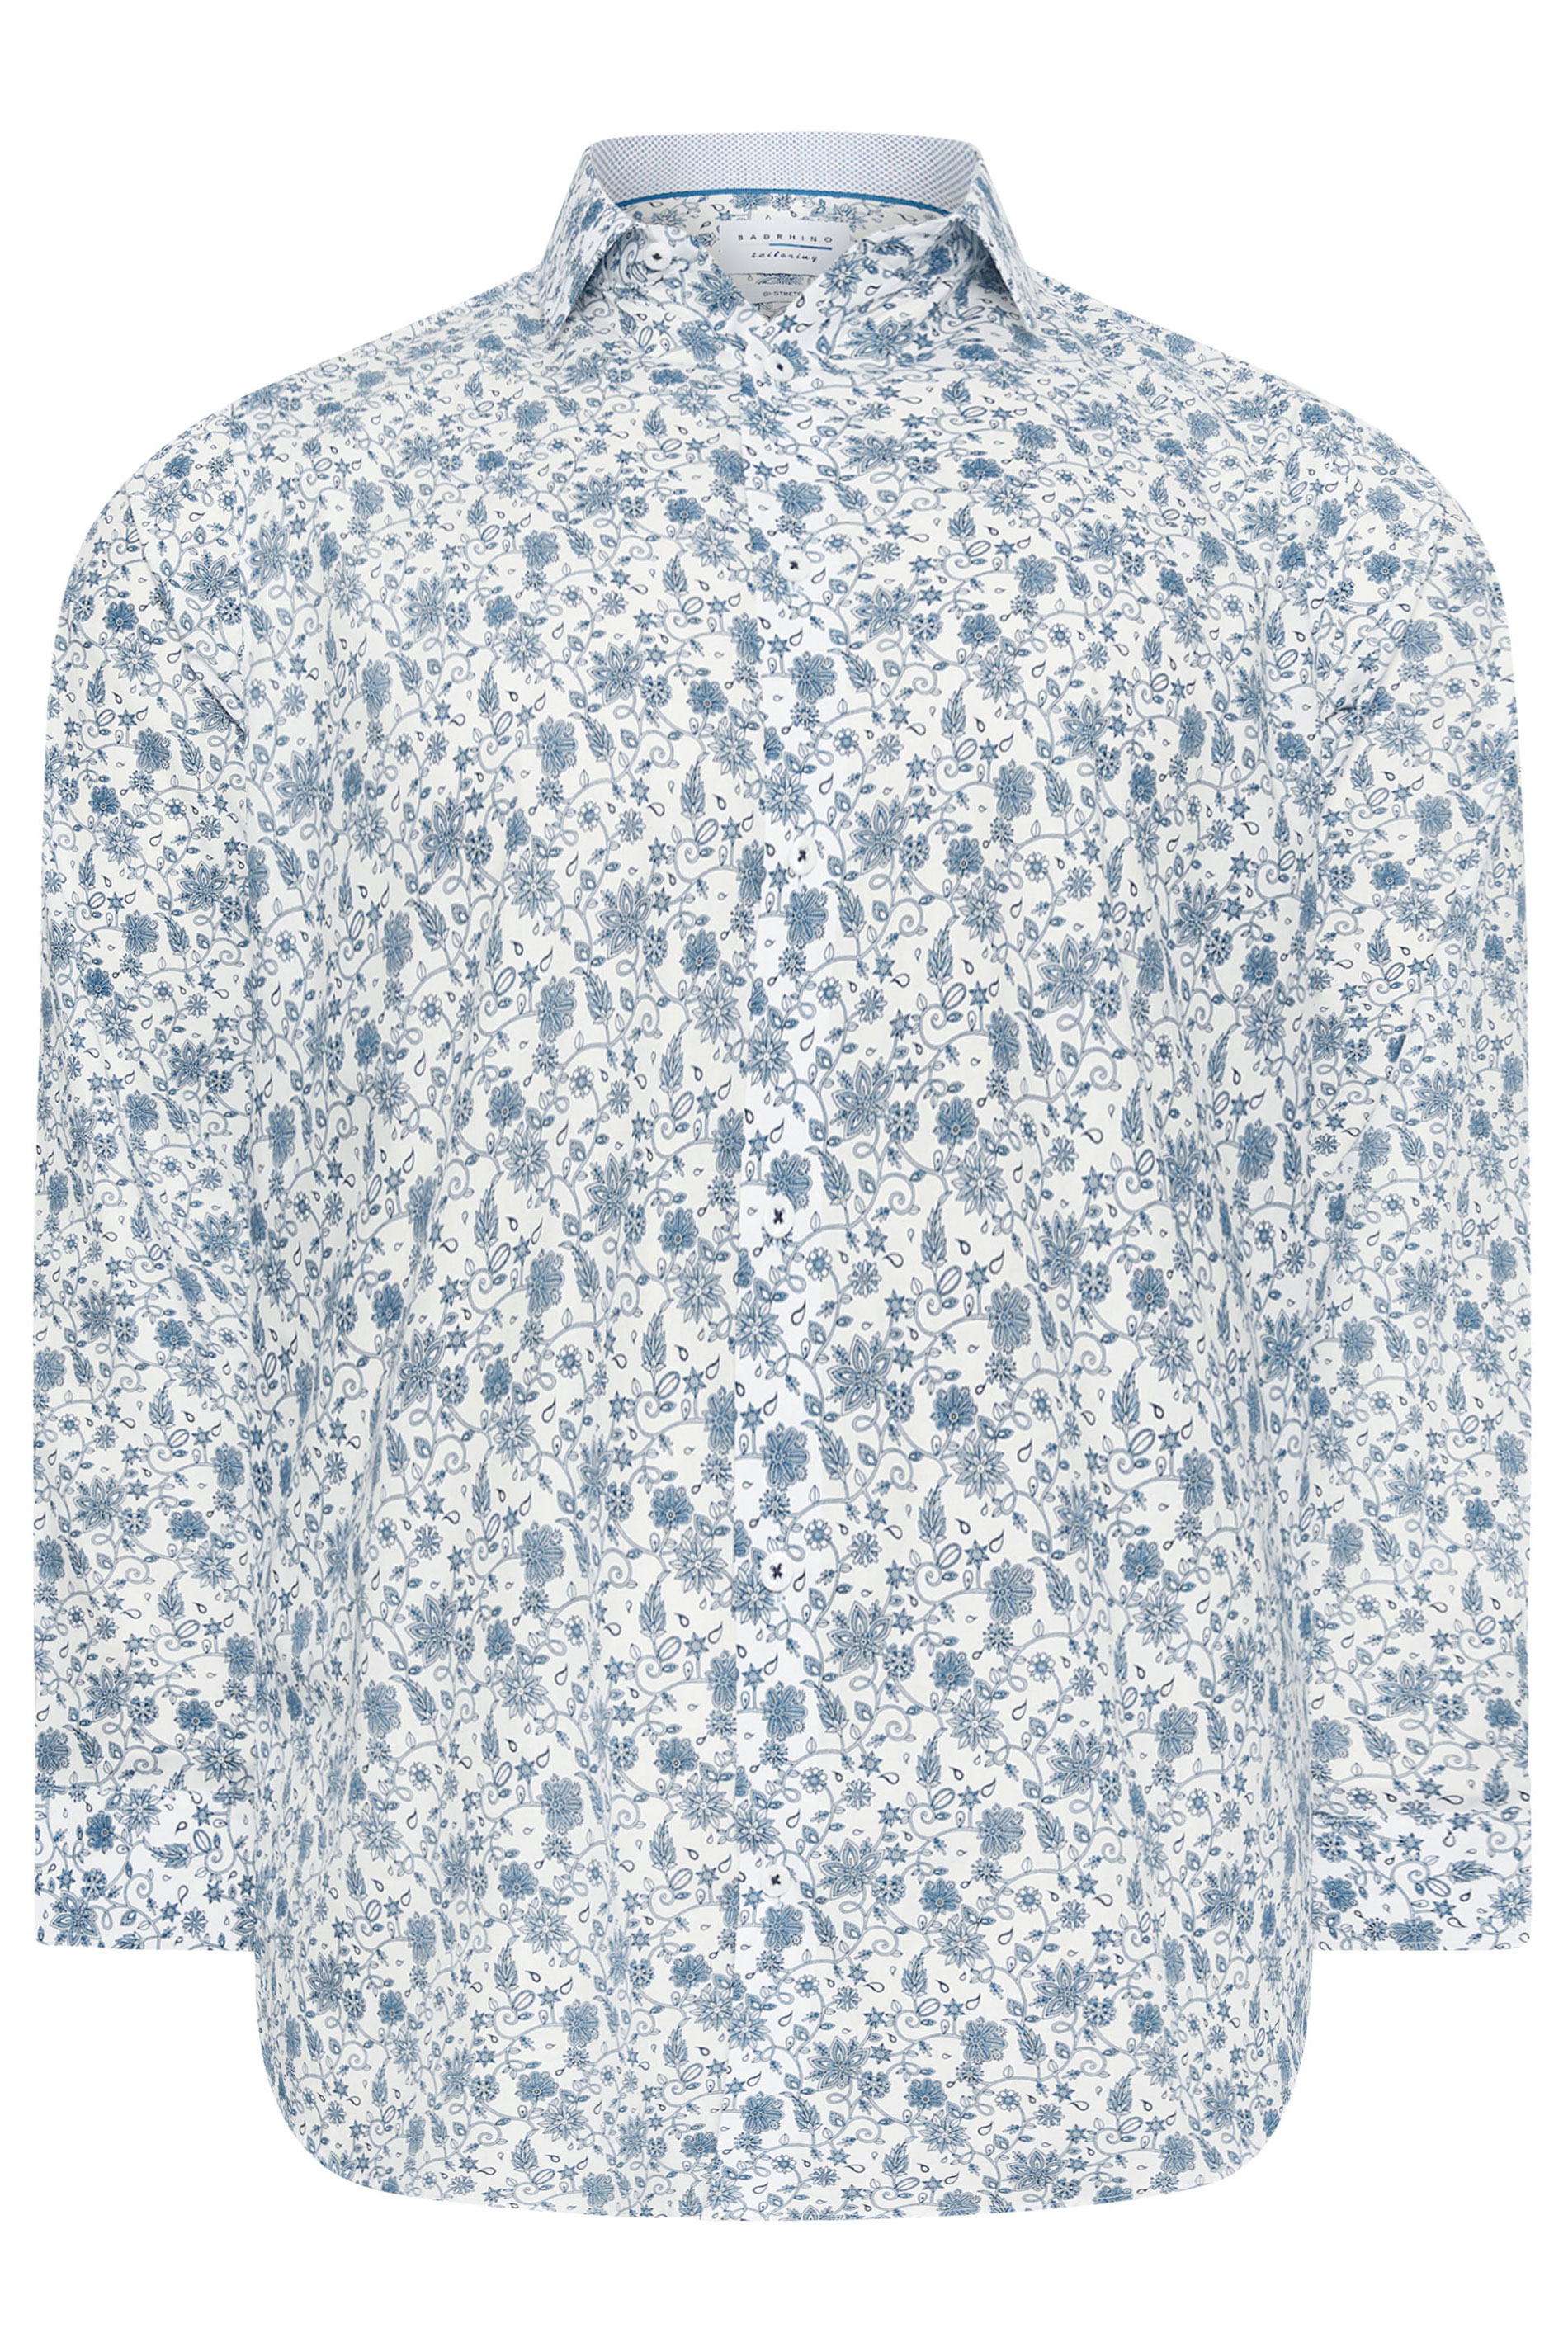 BadRhino Big & Tall Premium White & Blue Paisley Print Long Sleeve Shirt | BadRhino 3